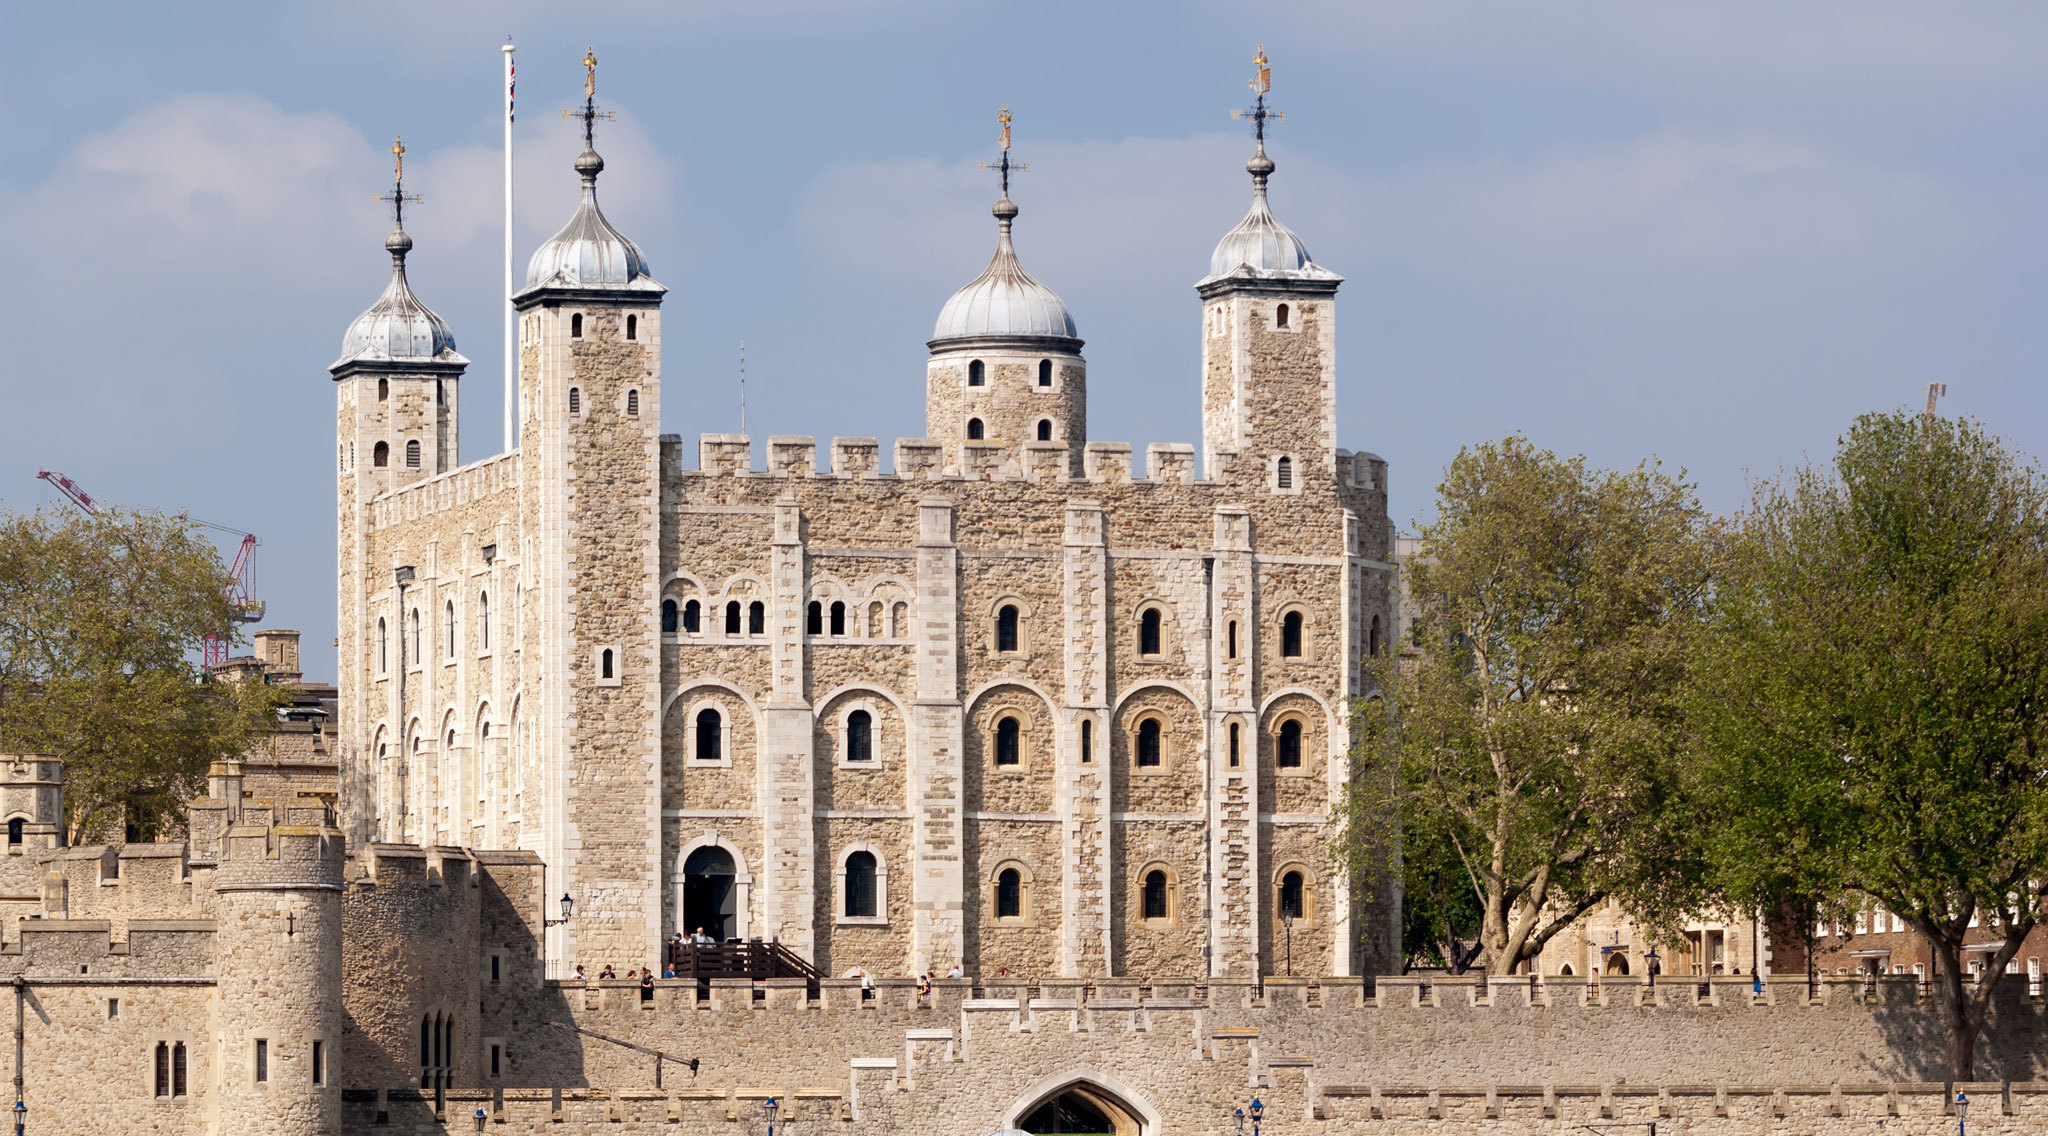 Tower Of London London England